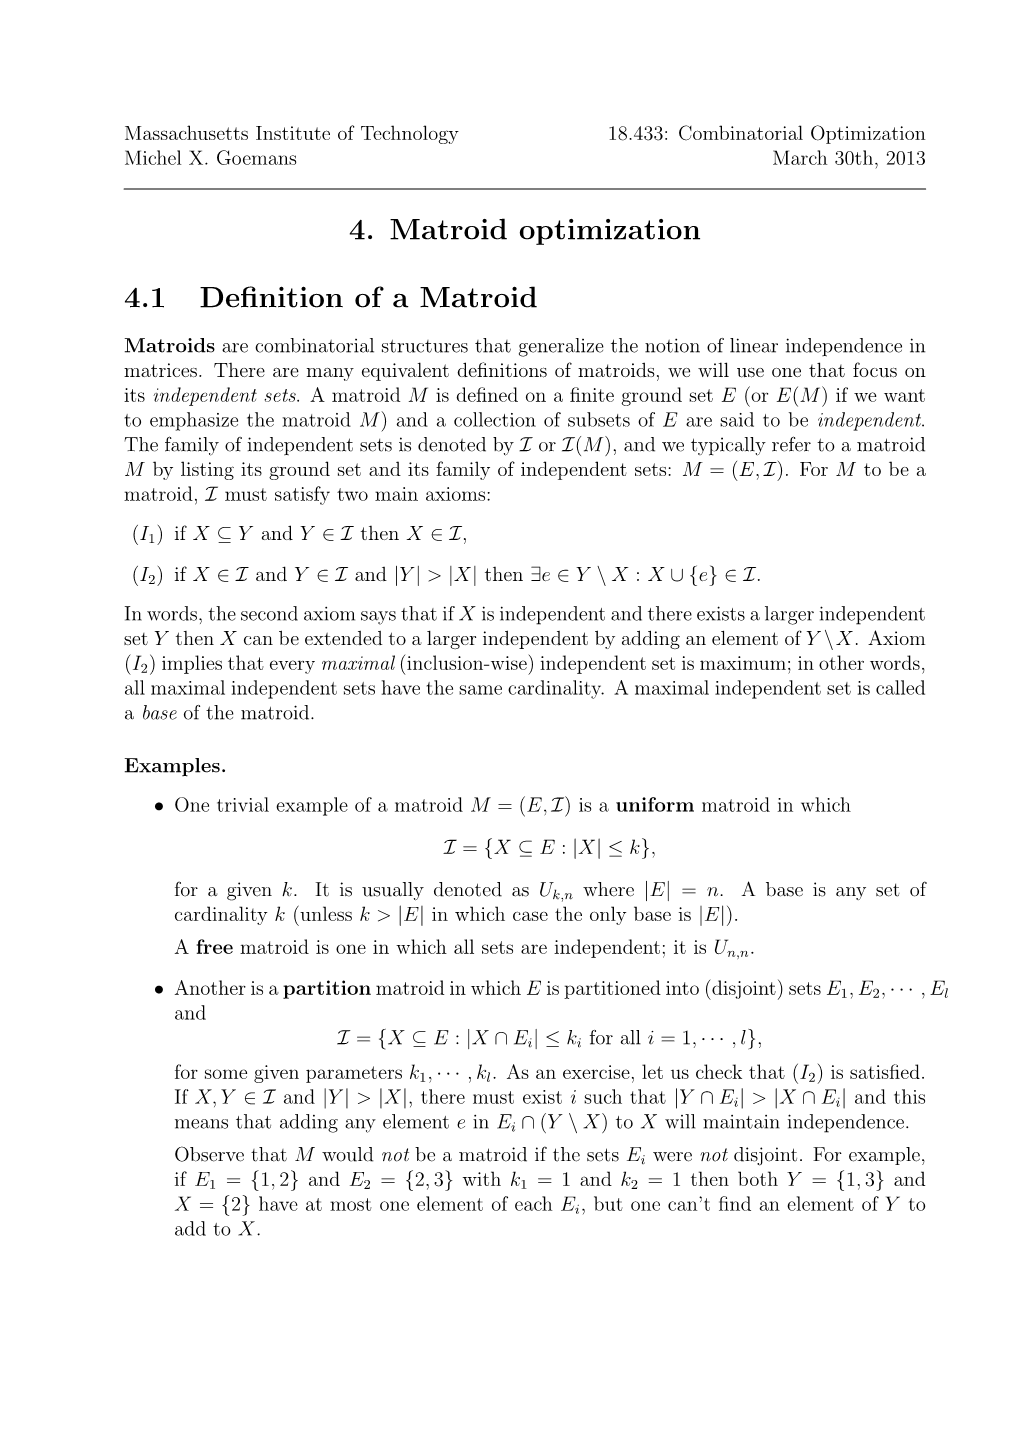 4. Matroid Optimization 4.1 Definition of a Matroid